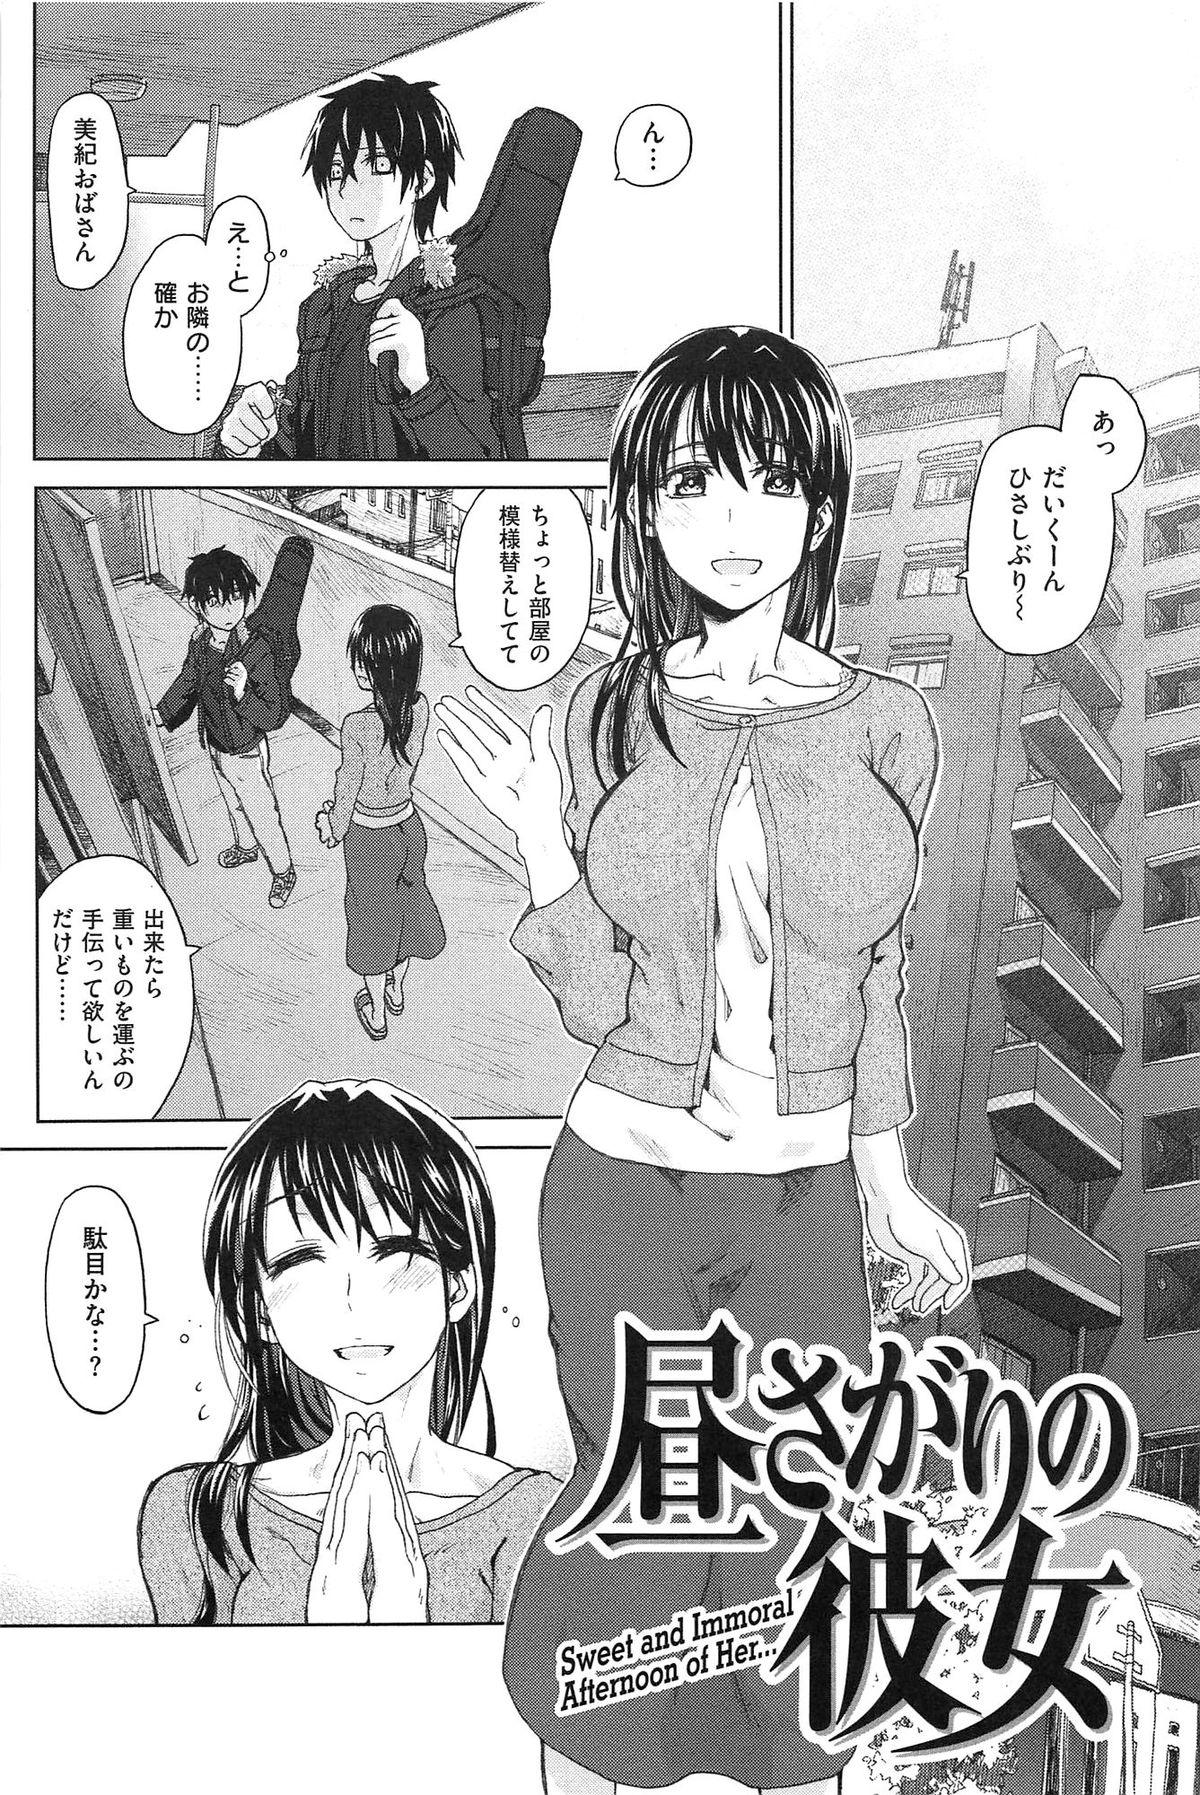 [Dagashi] Junketsu no Owaru Hibi (Beautiful Days of Losing Virginity) … (WANI MAGAZINE COMICS SPECIAL) 25